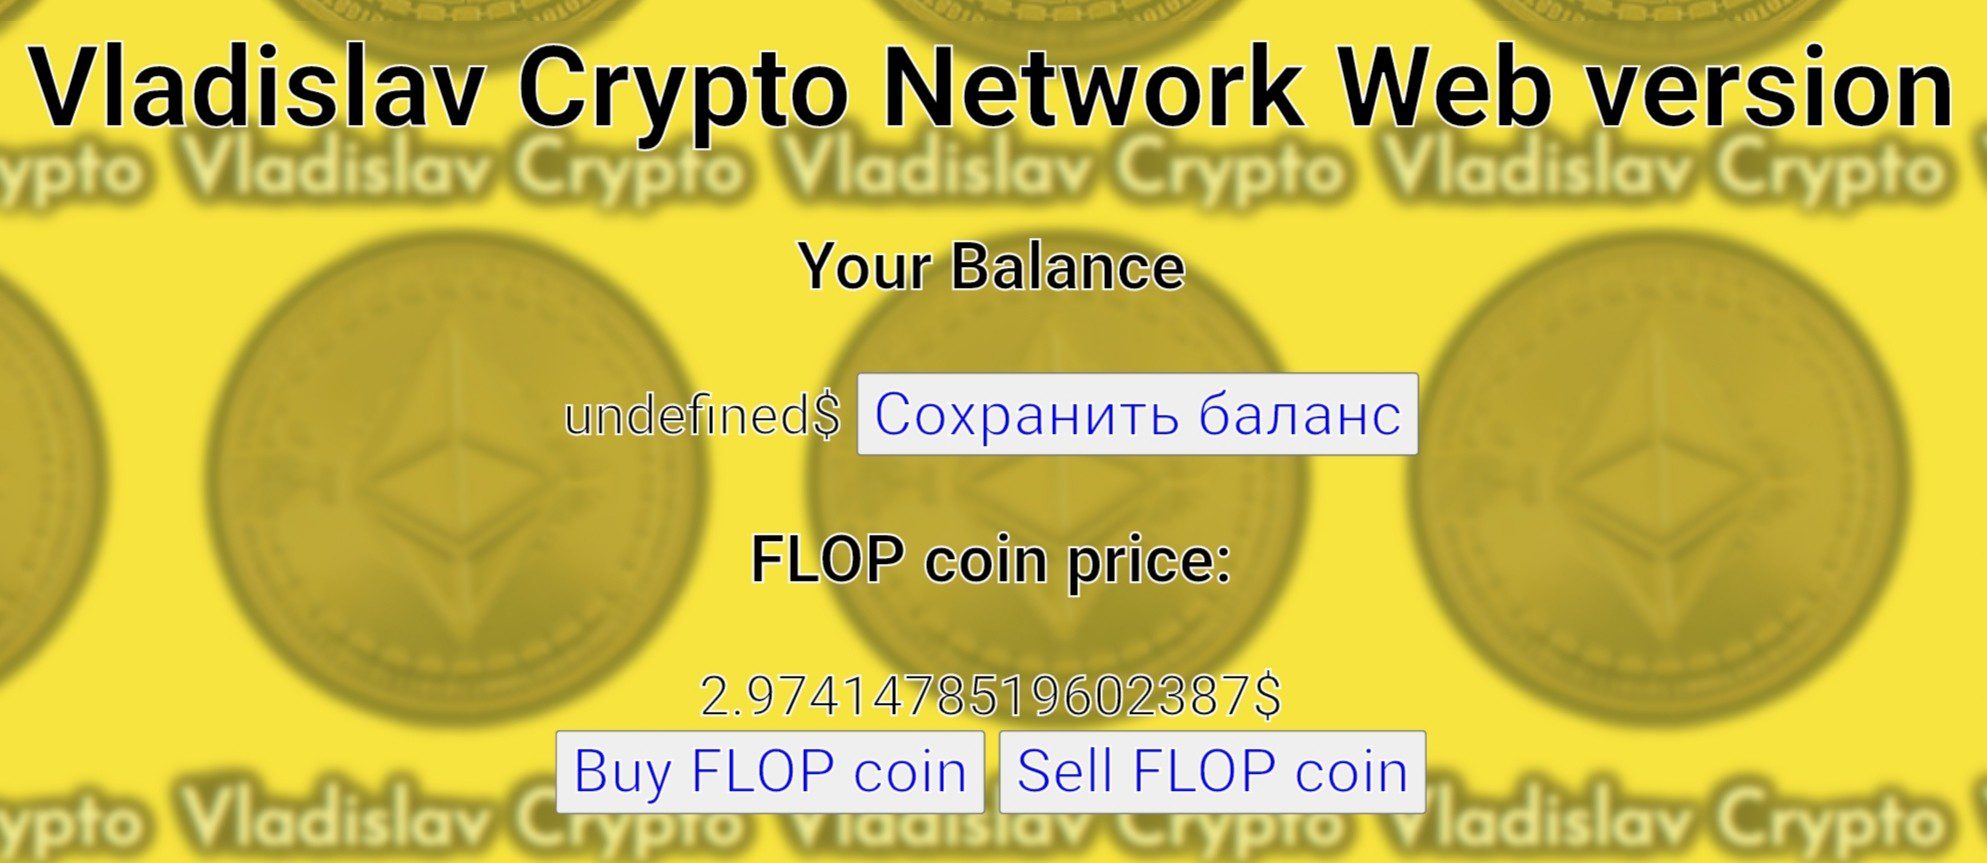 vladislav crypto network